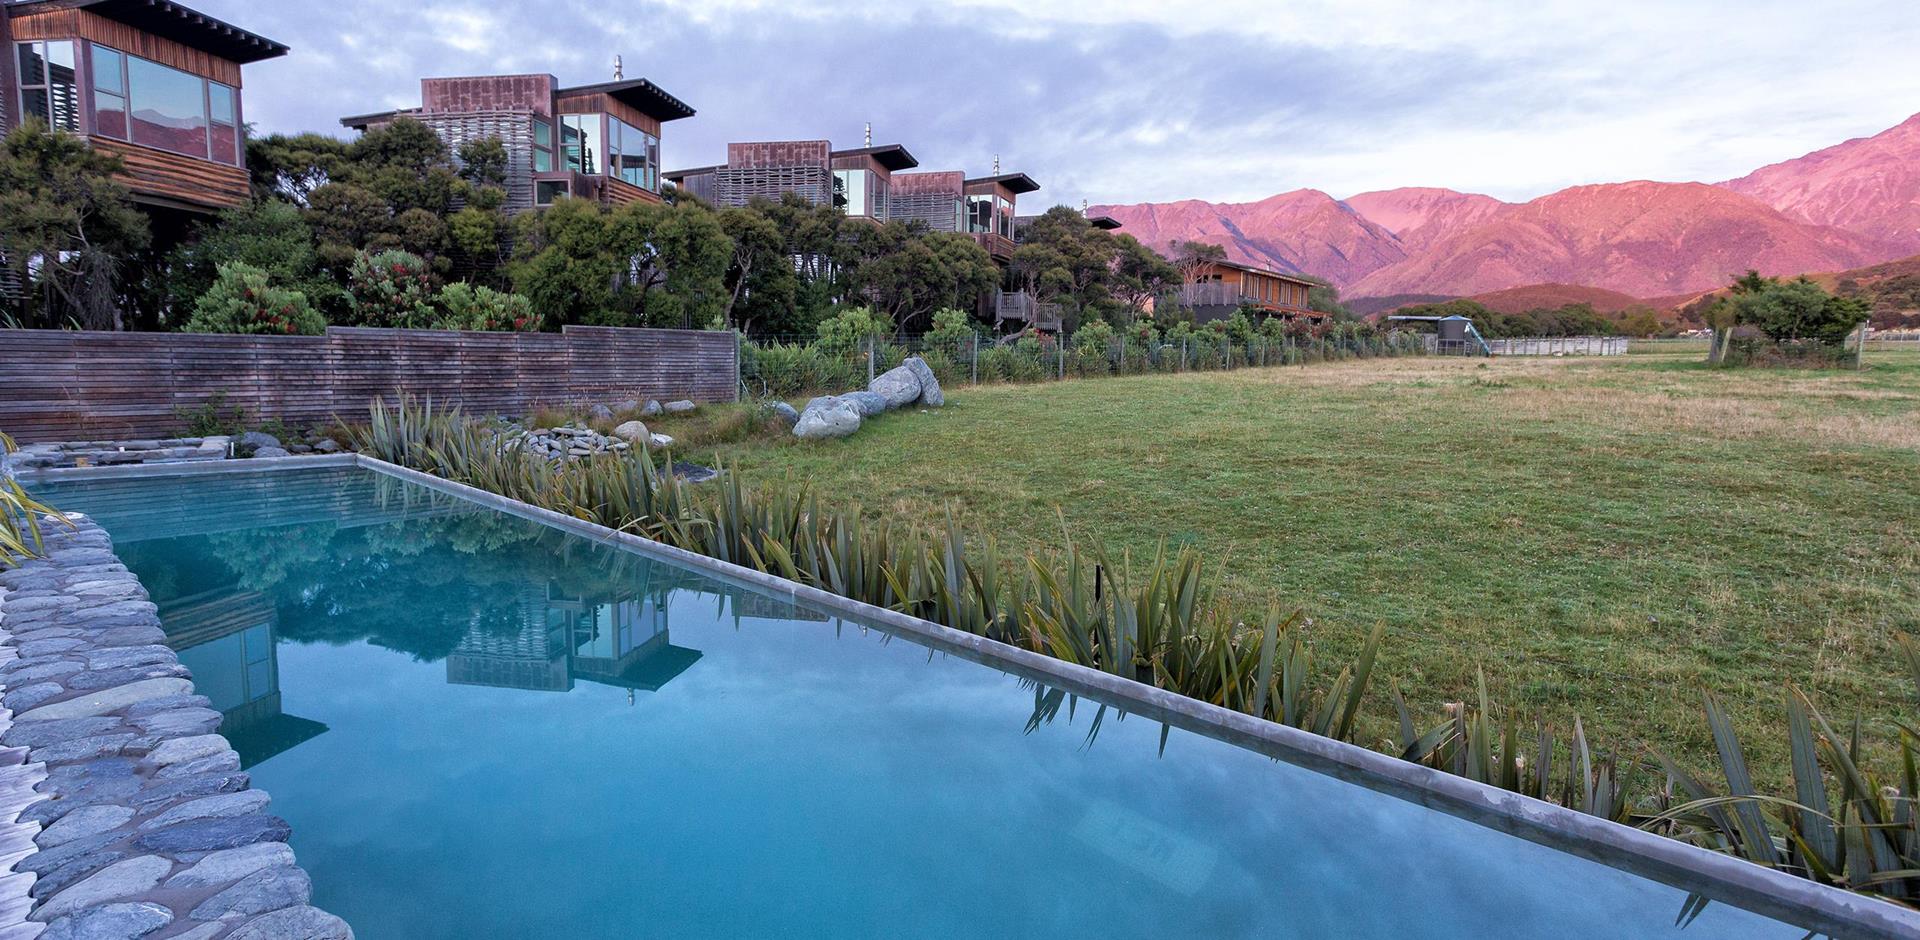 Pool and exterior, Hapuku Lodge, New Zealand